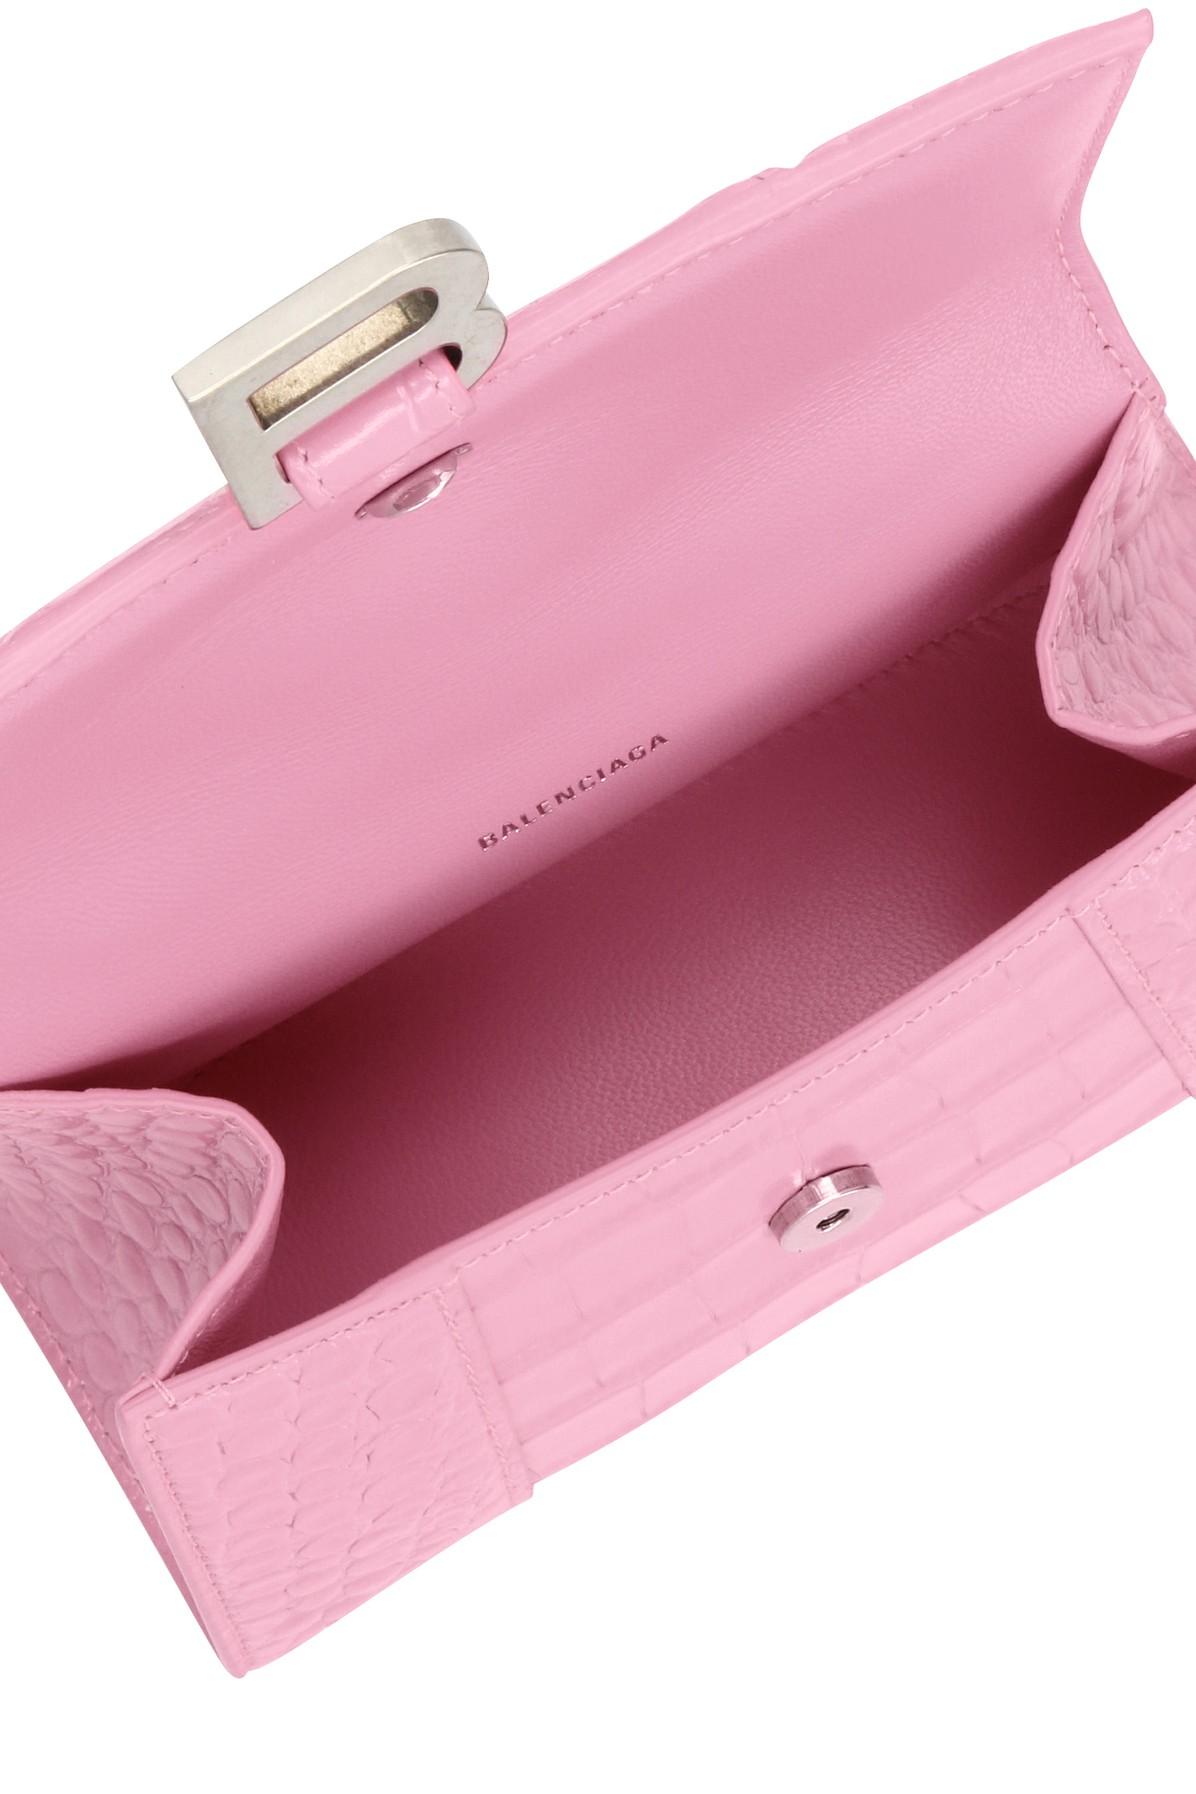 Balenciaga Graffiti Hourglass Top Handle Bag Leather XS Pink 2374321